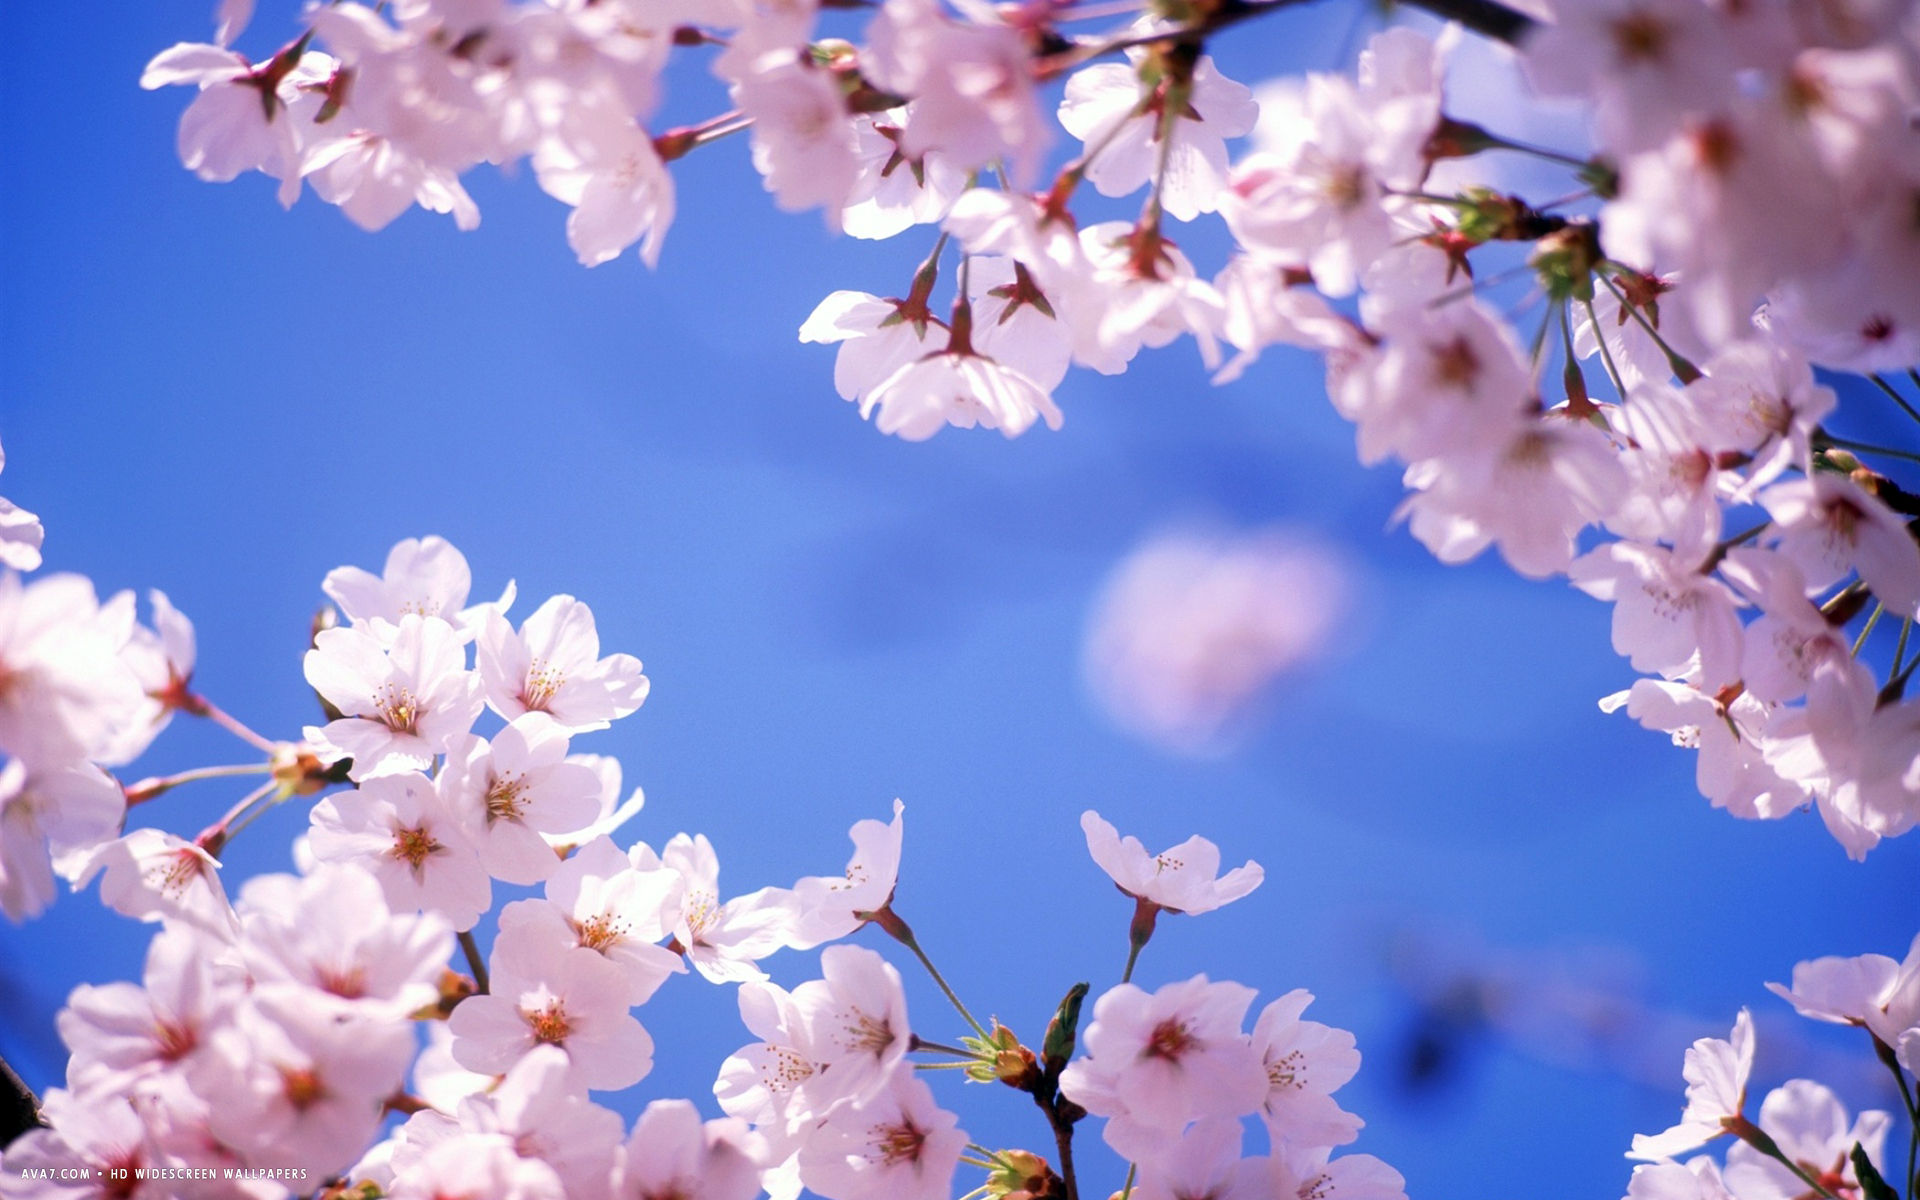 flower blossom wallpaper,flower,blossom,spring,branch,cherry blossom